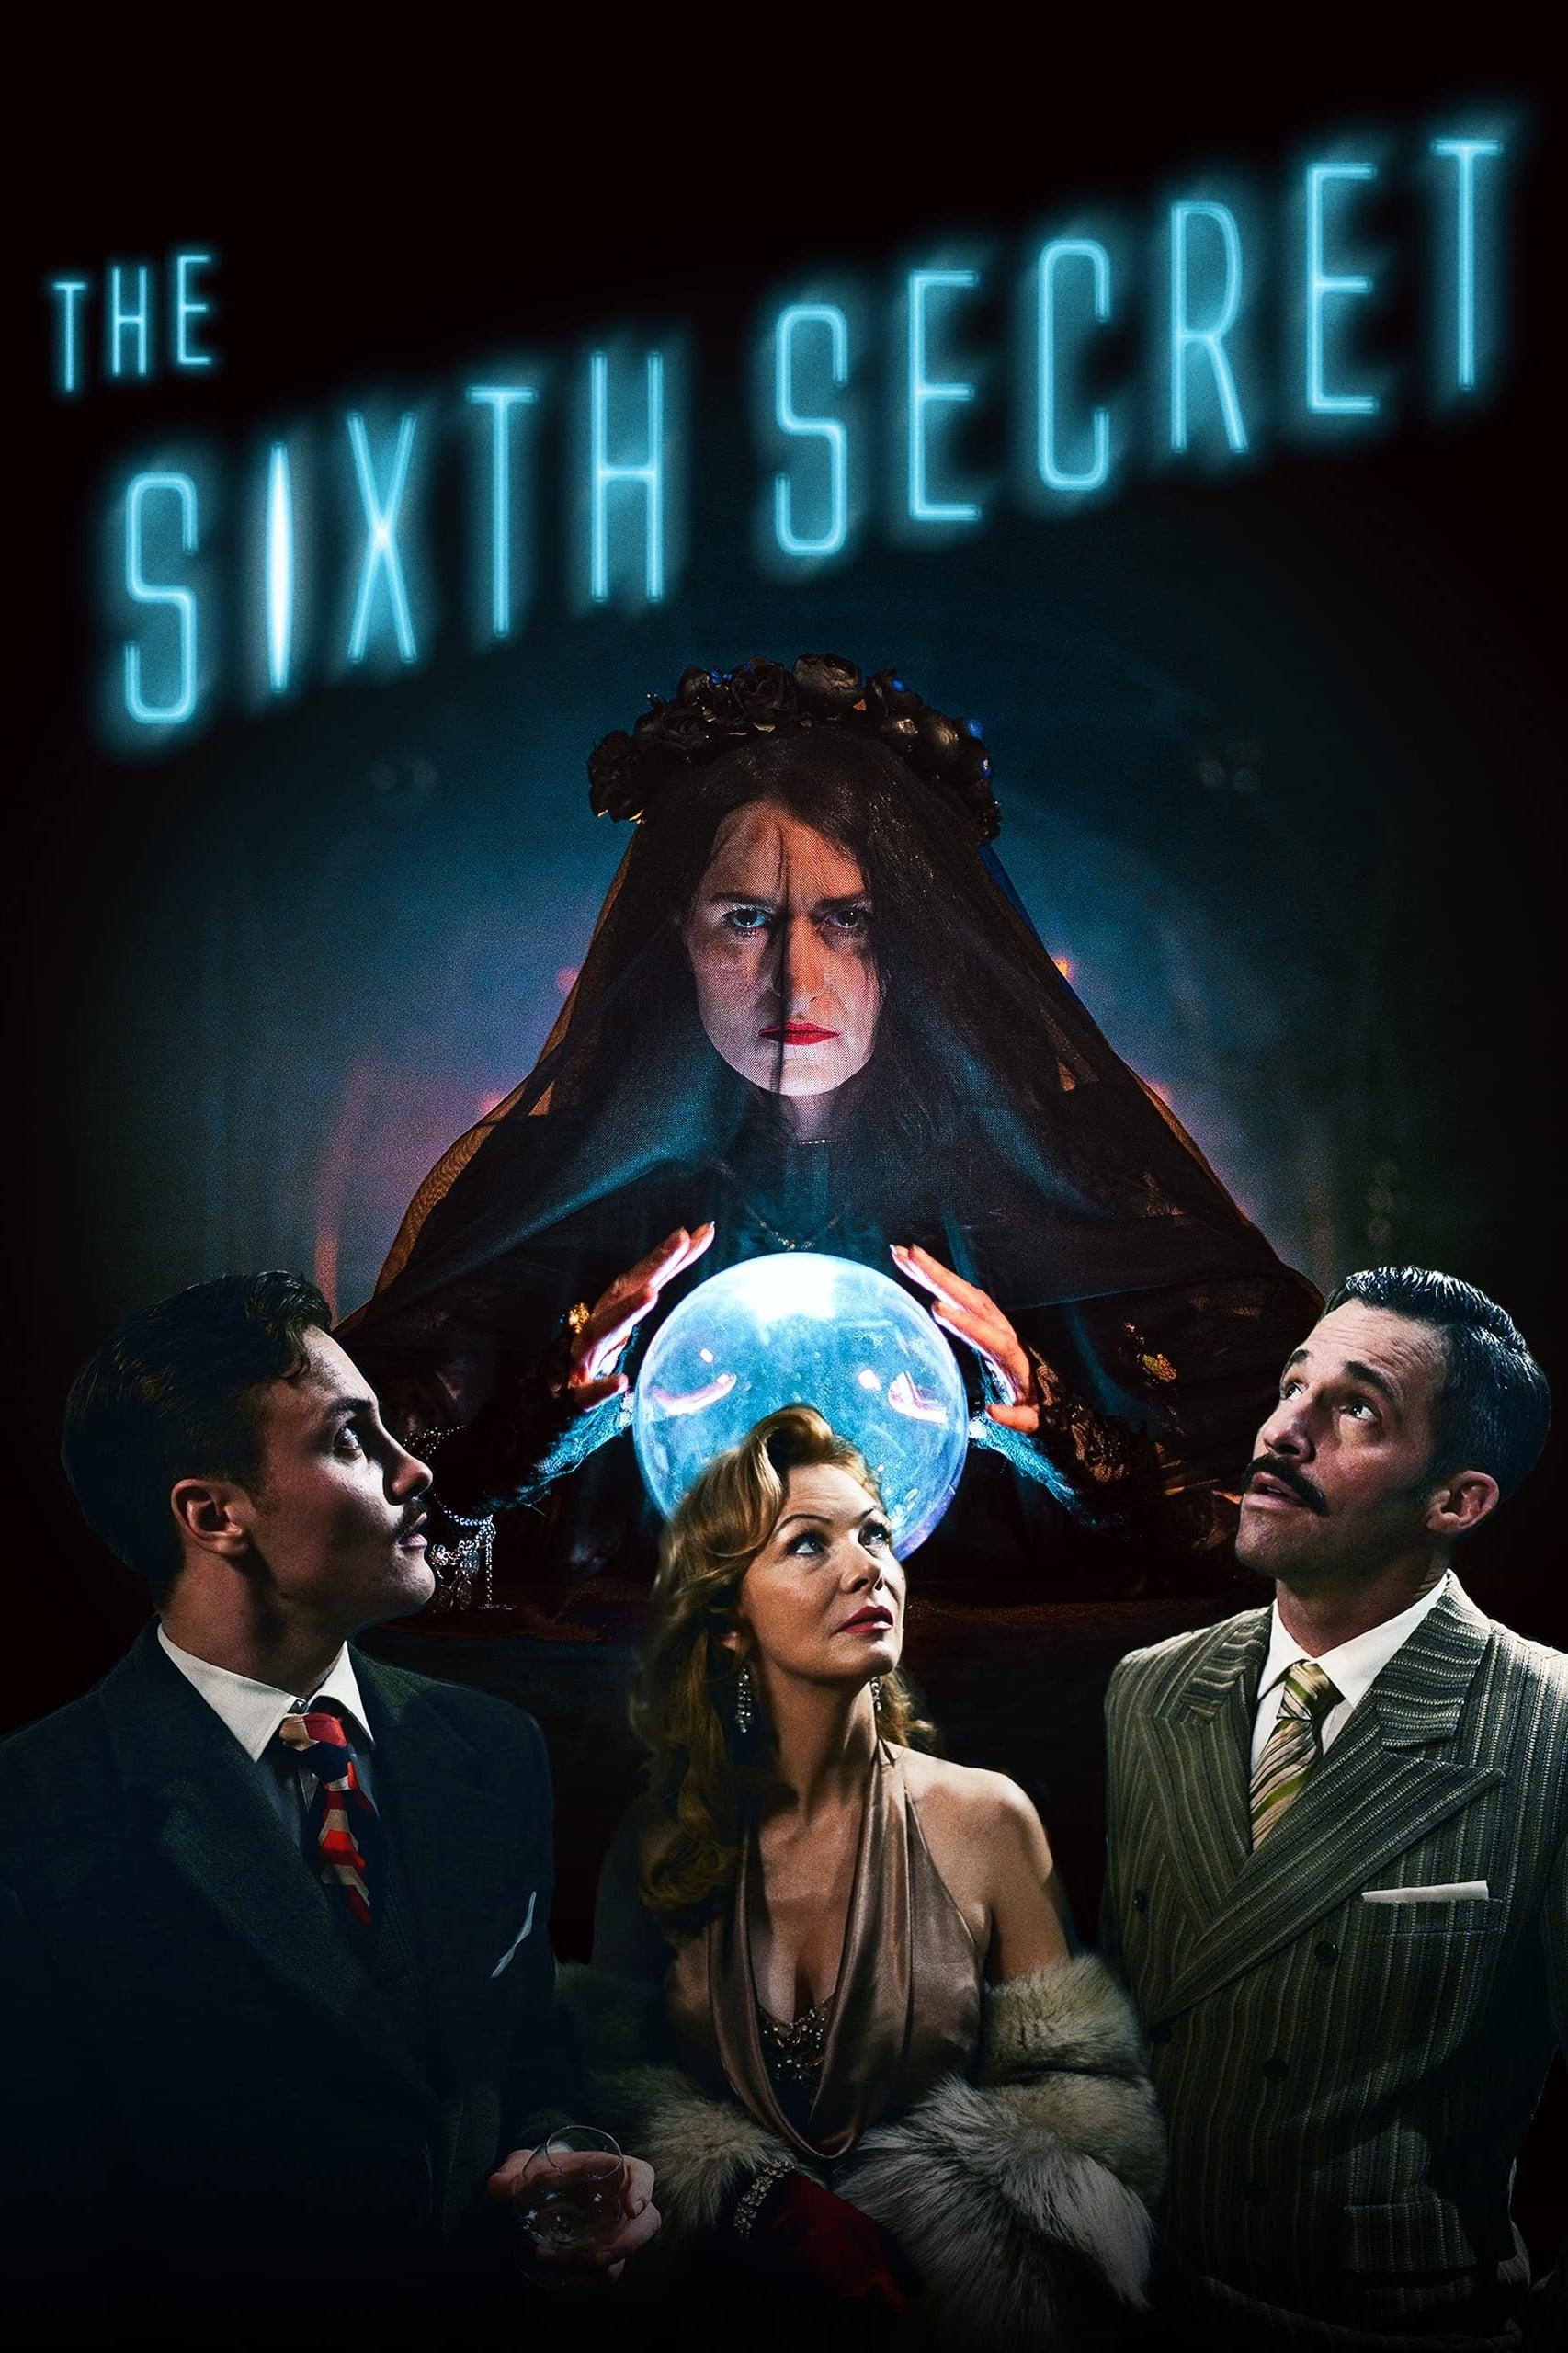 The Sixth Secret poster